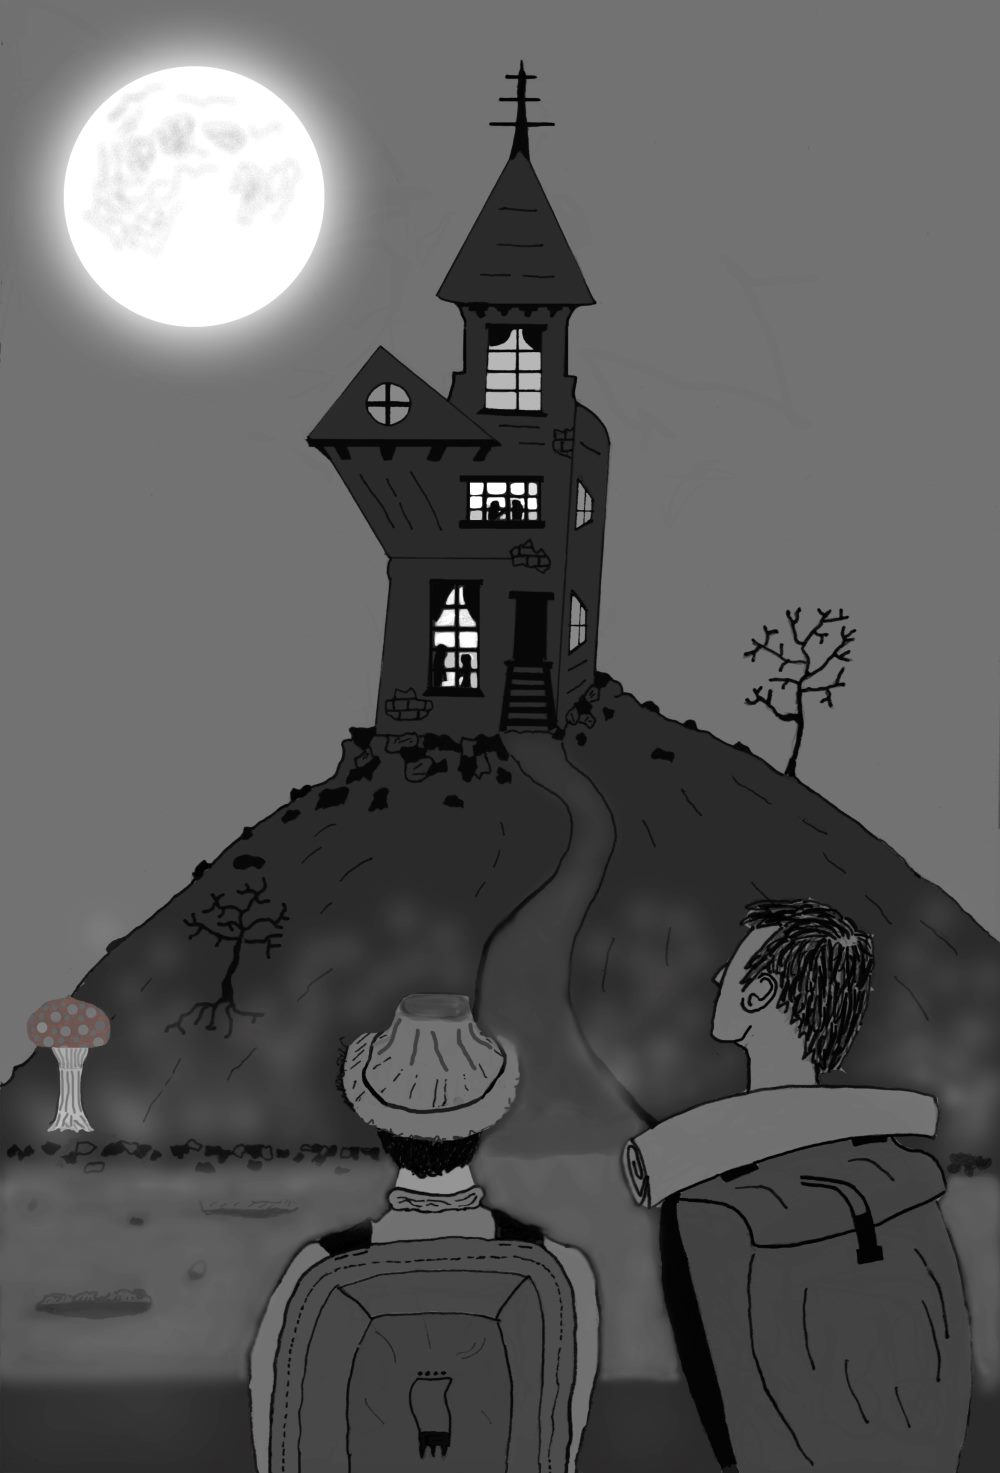 House of Horrors. Illustration: Gareth Mason.